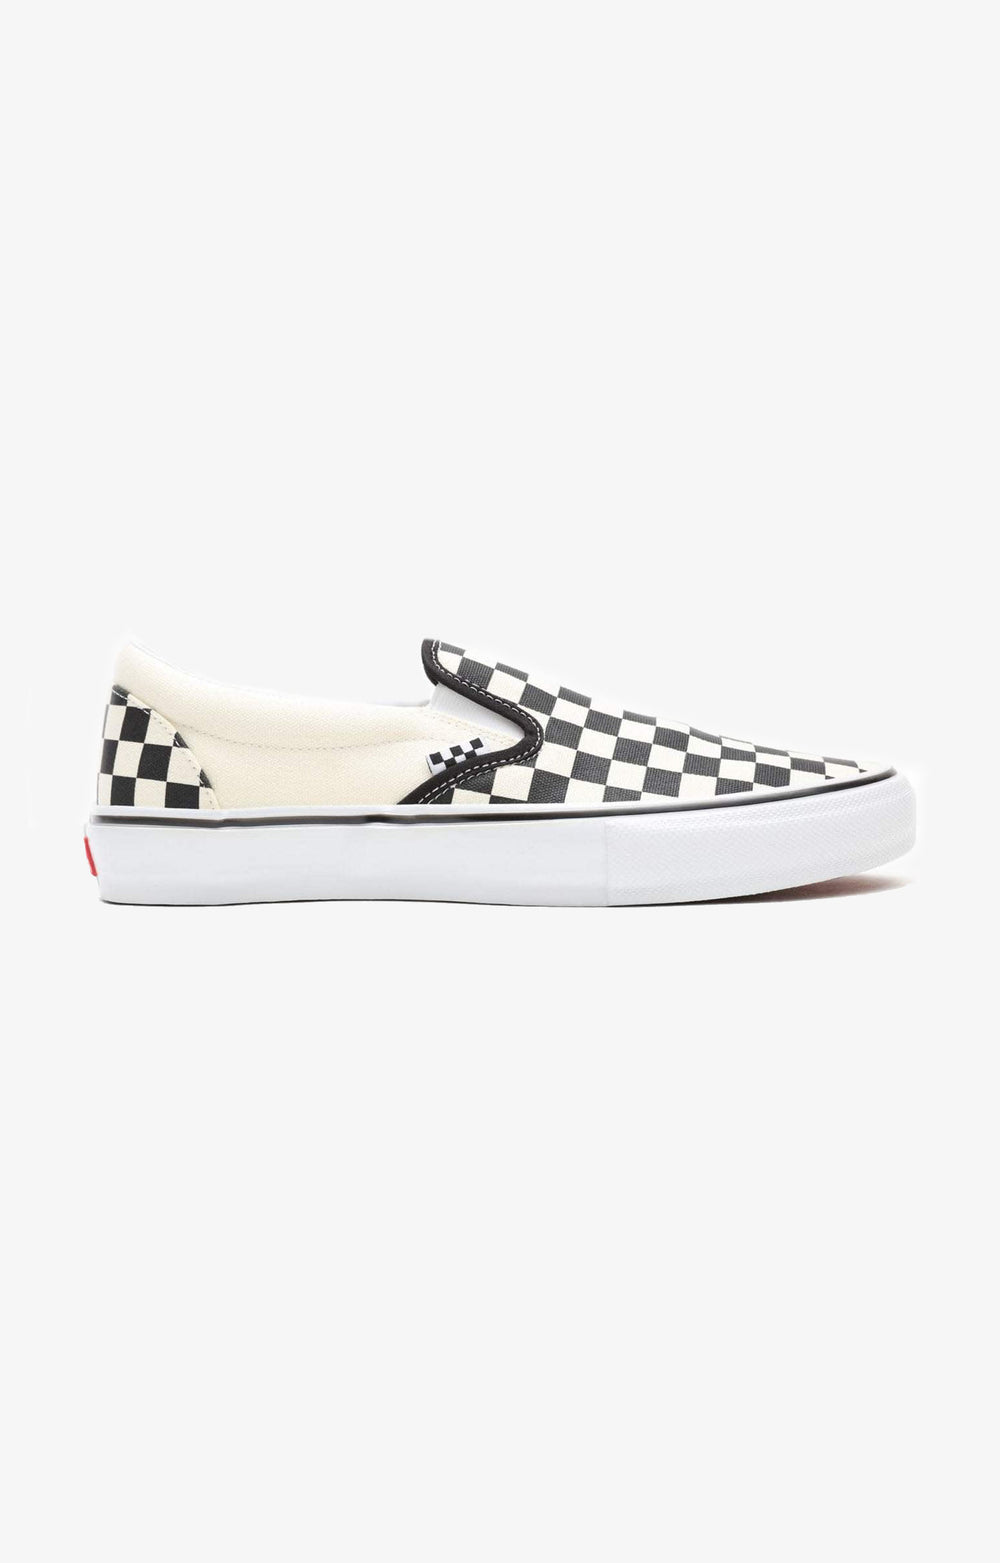 Vans Skate Slip-On Pro Shoes, Checkerboard